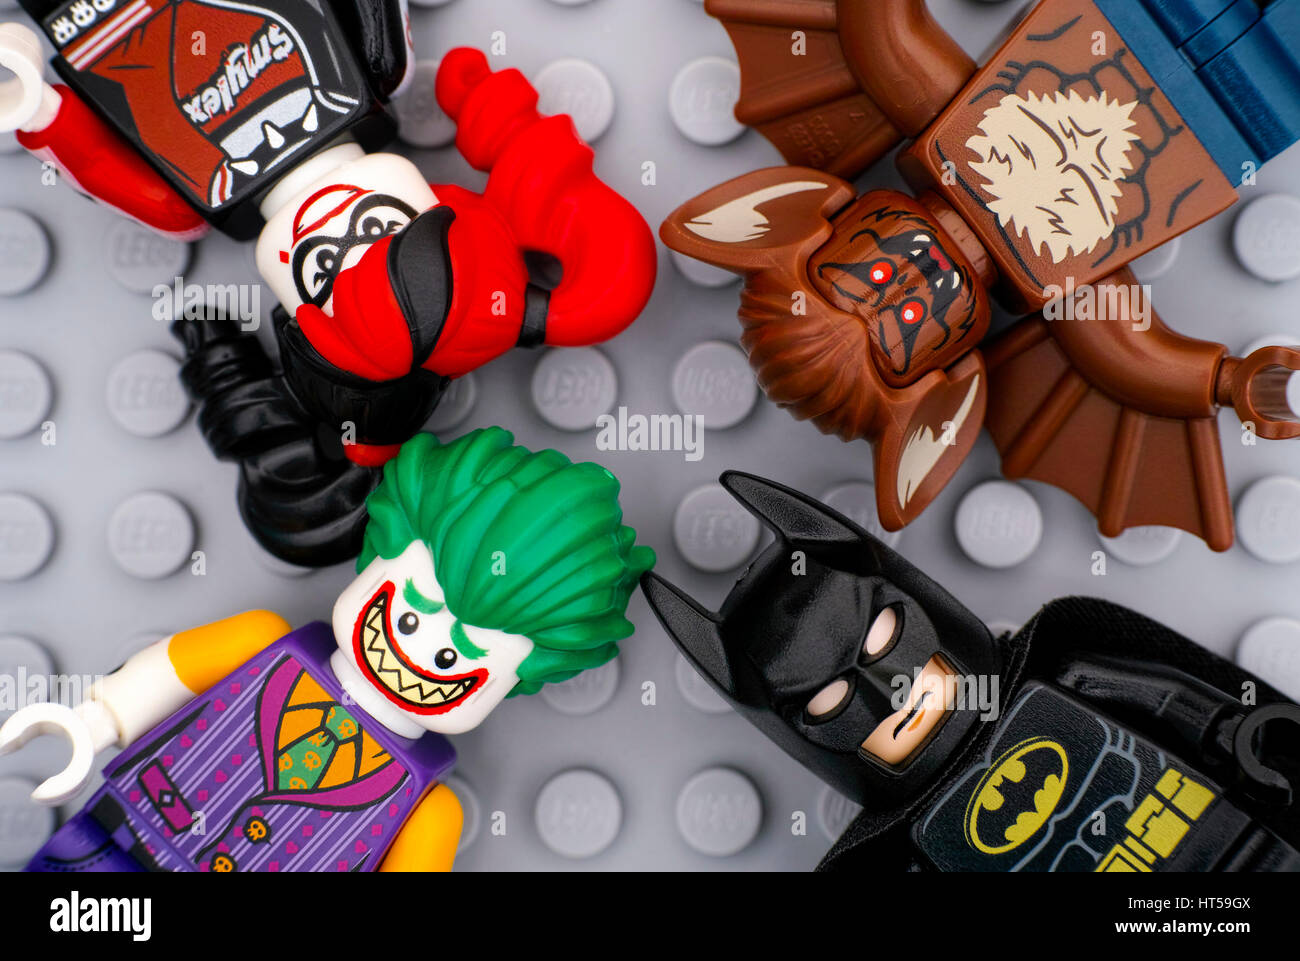 Tambov, Russian Federation - February 11, 2017 Four Lego minifigures - Batman, The Joker, Harley Quinn and Man-Bat - on Lego gray baseplate background Stock Photo